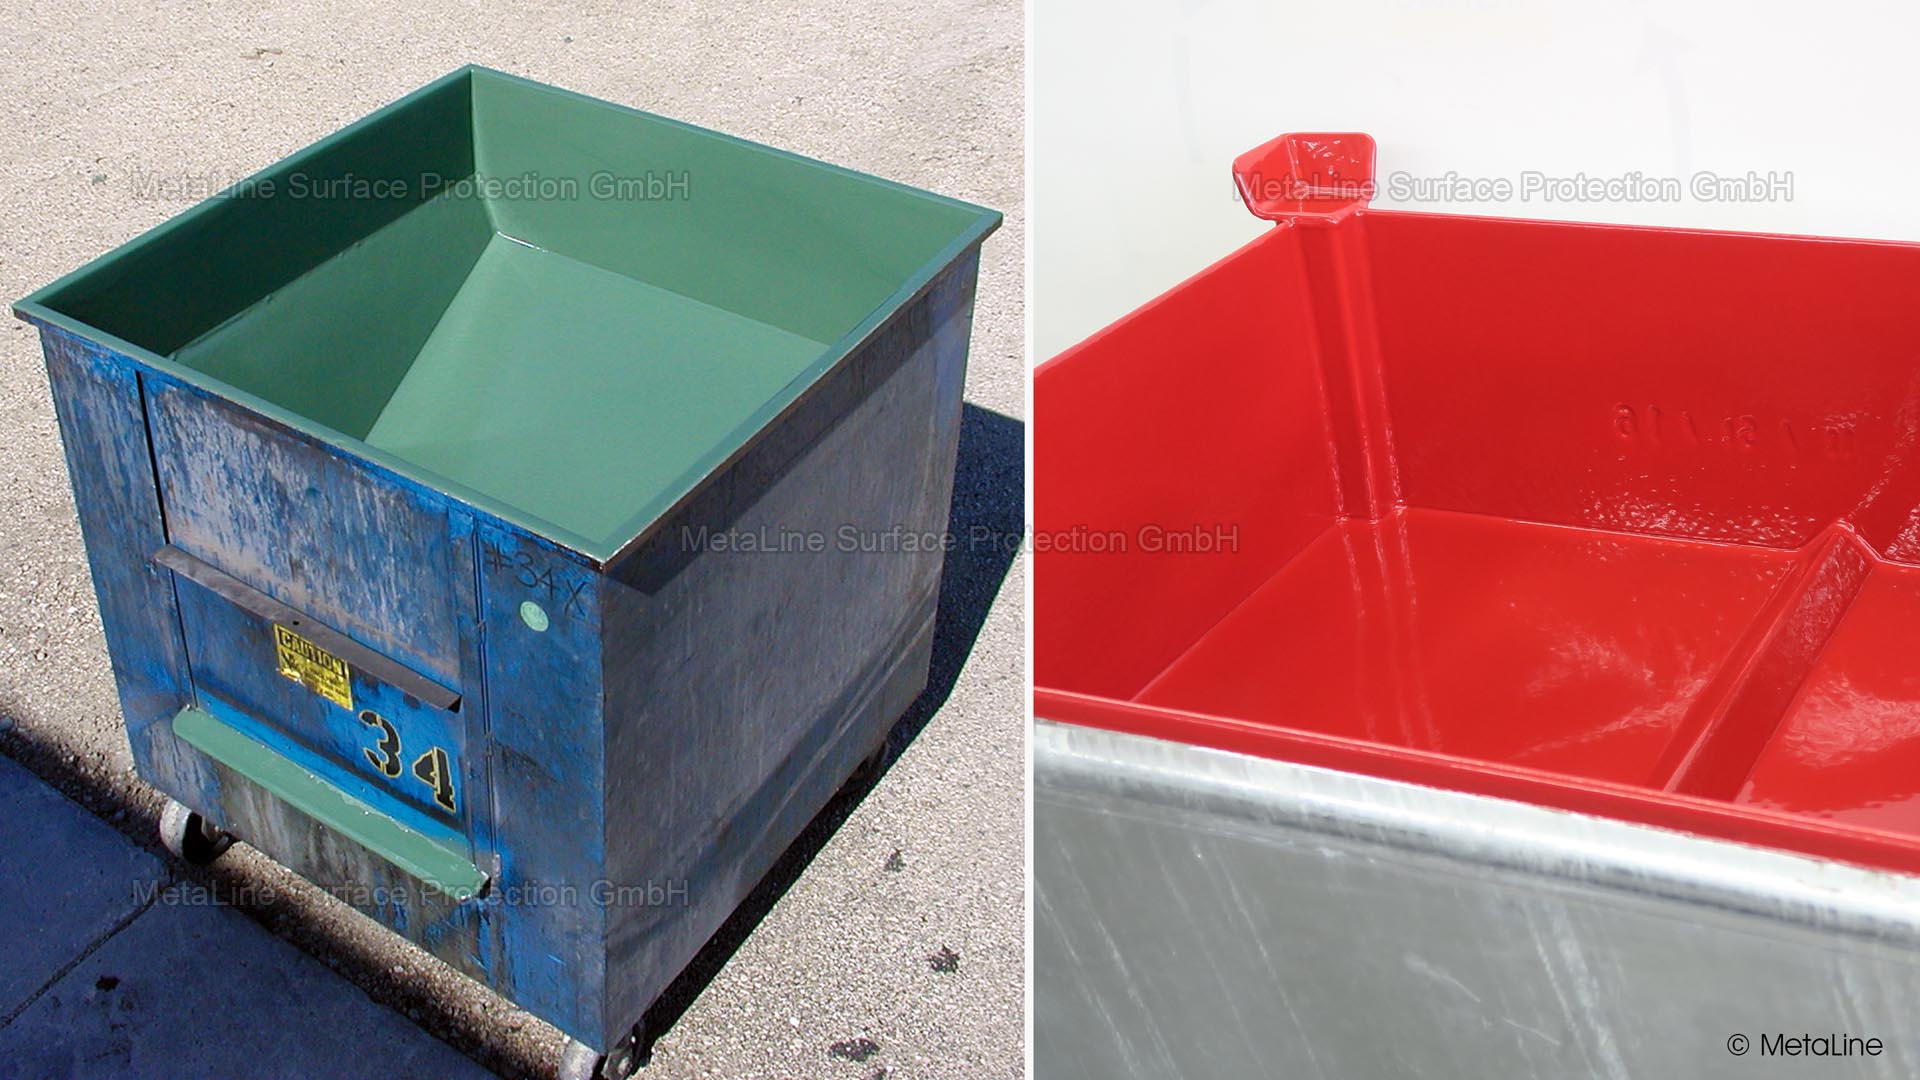 1095-0027_Transportbehälter_Beschichtung_container_coating